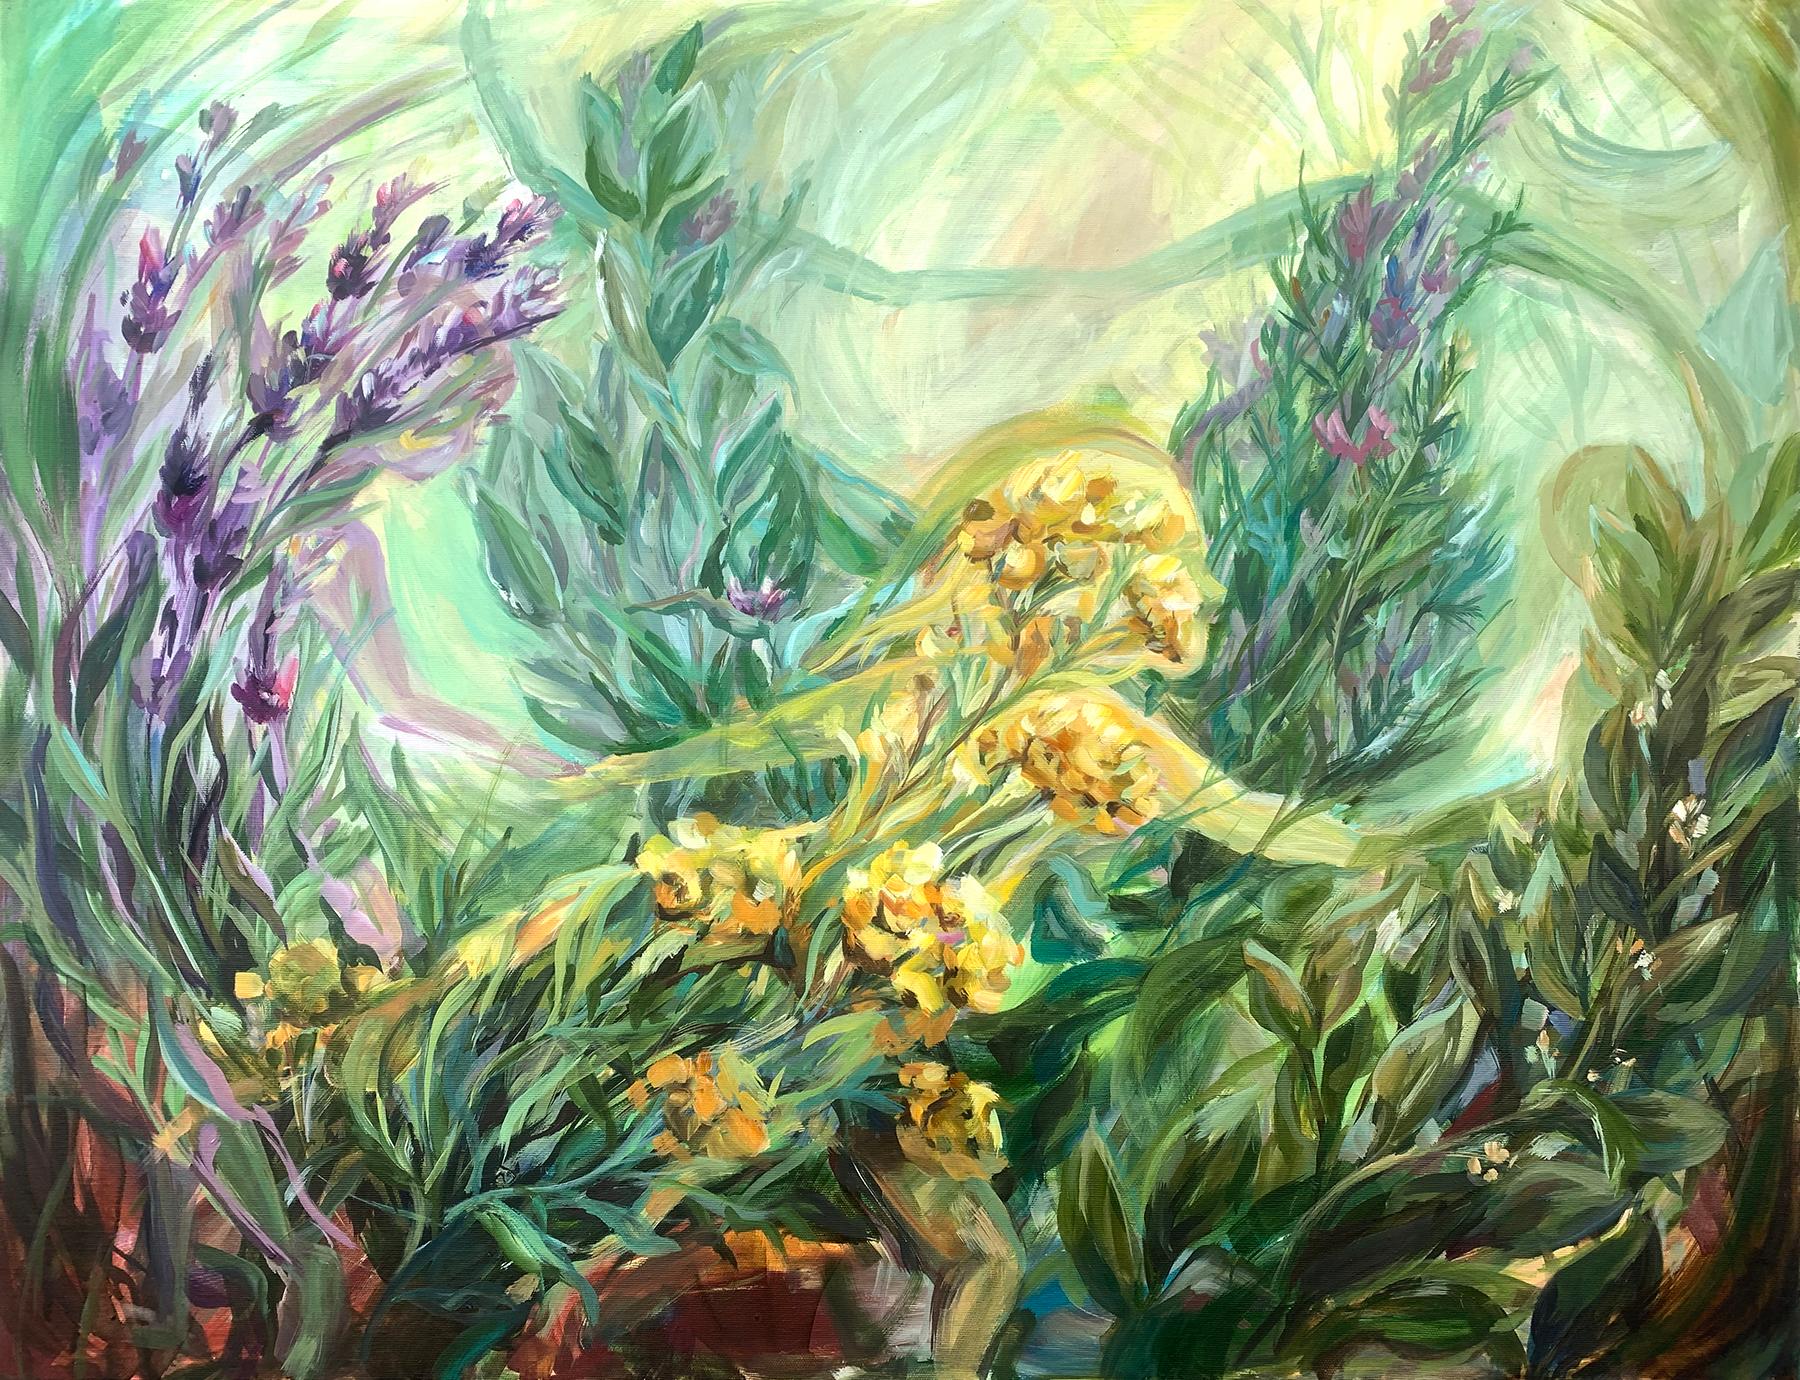 Momalyu Liubov Landscape Painting - Spirit Herbal Fairies.  Original oil painting on canvas